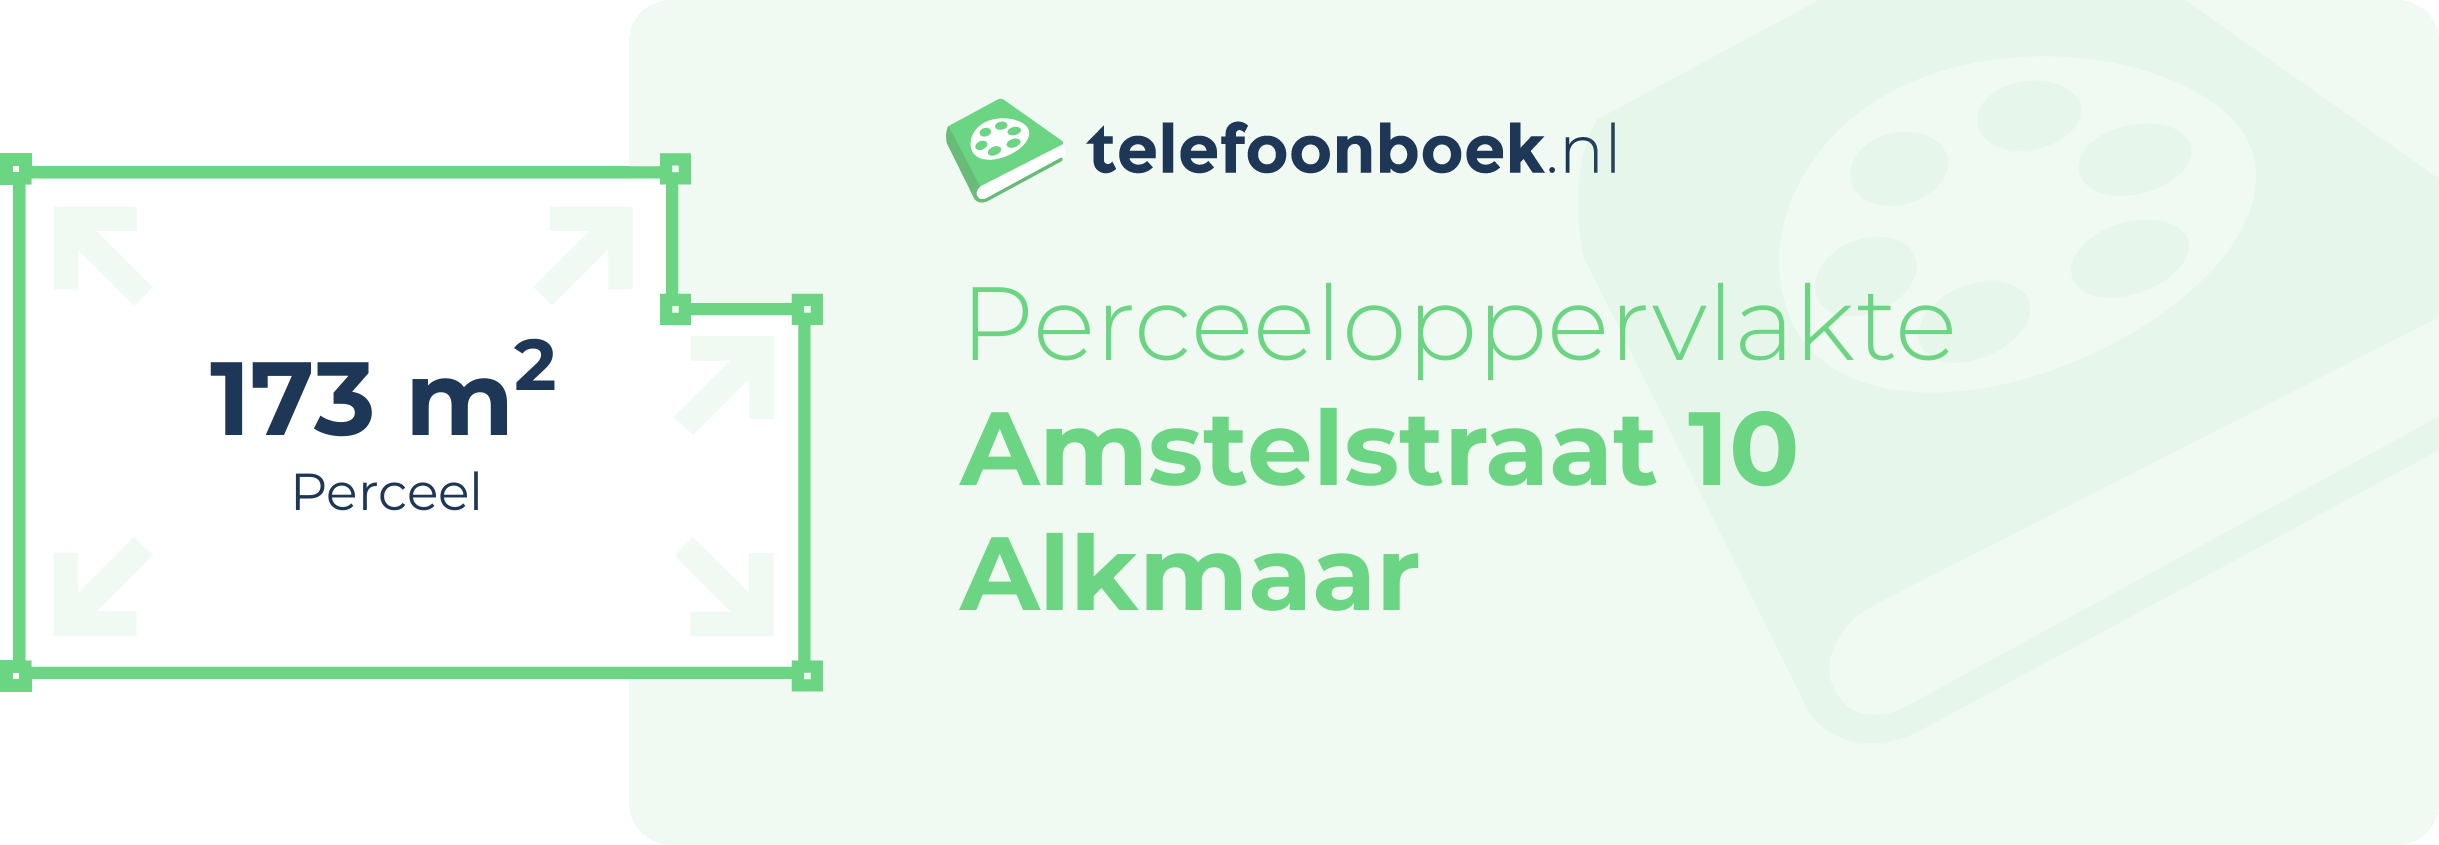 Perceeloppervlakte Amstelstraat 10 Alkmaar